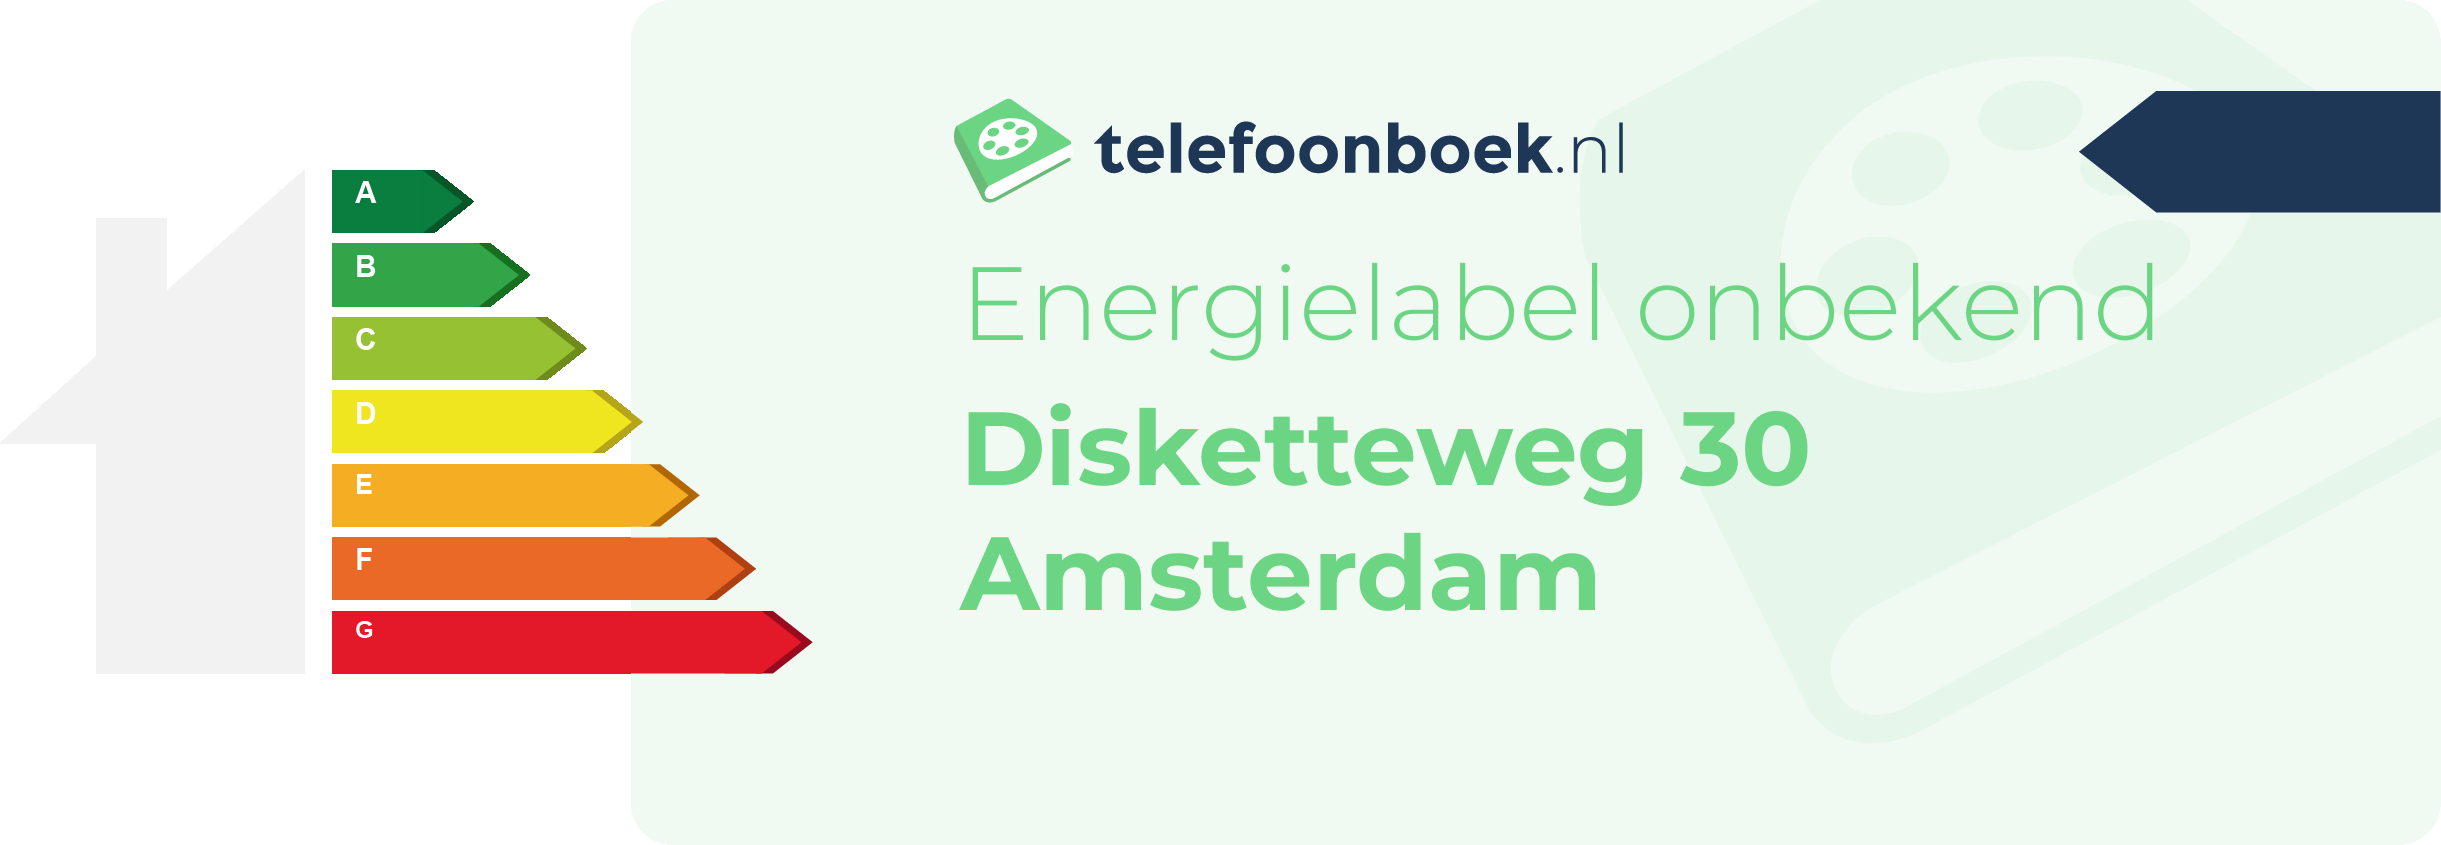 Energielabel Disketteweg 30 Amsterdam